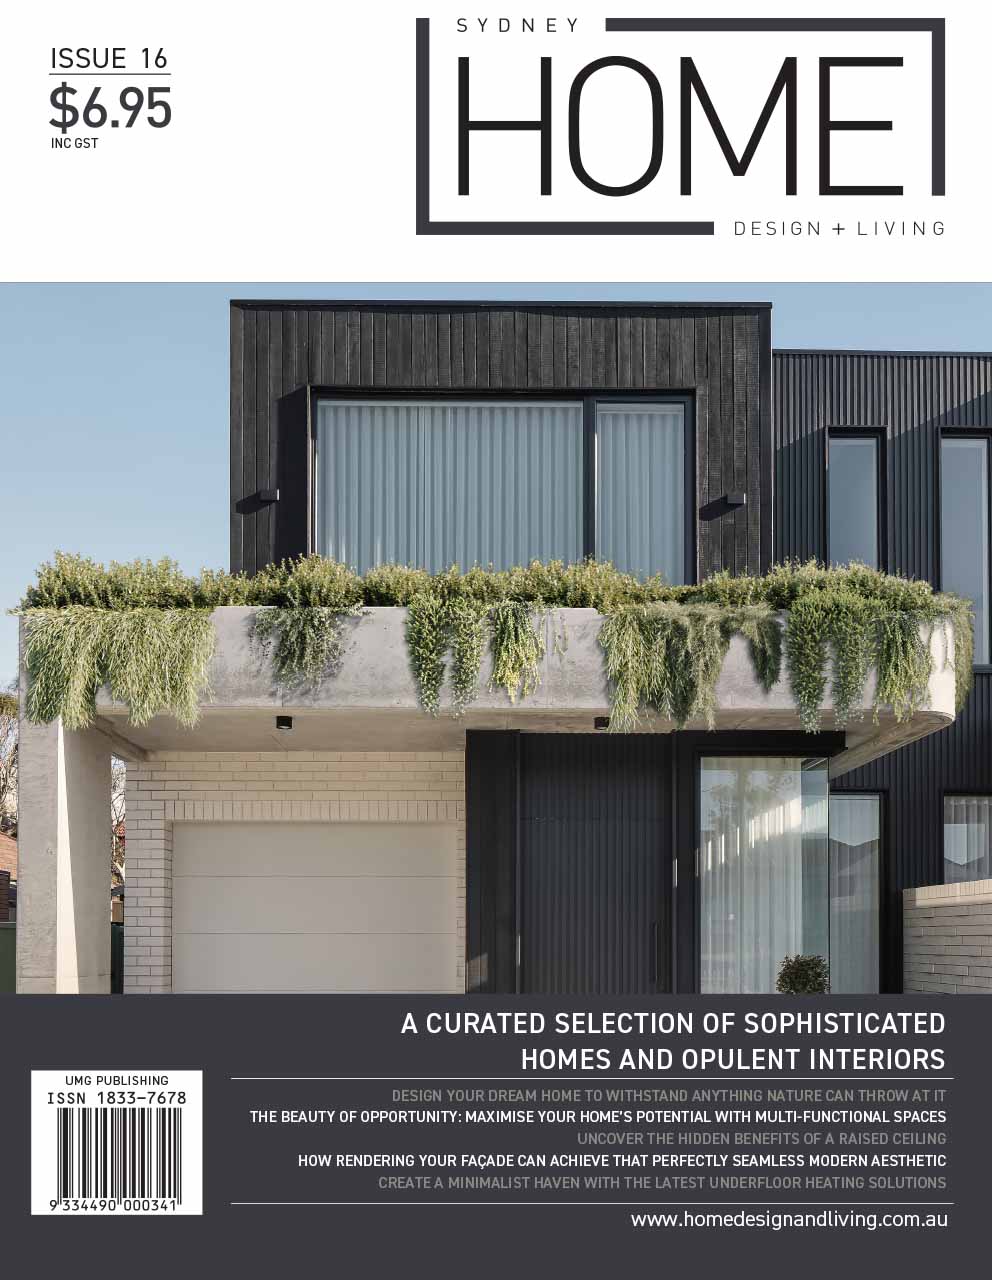 Sydney Home Design Issue 11